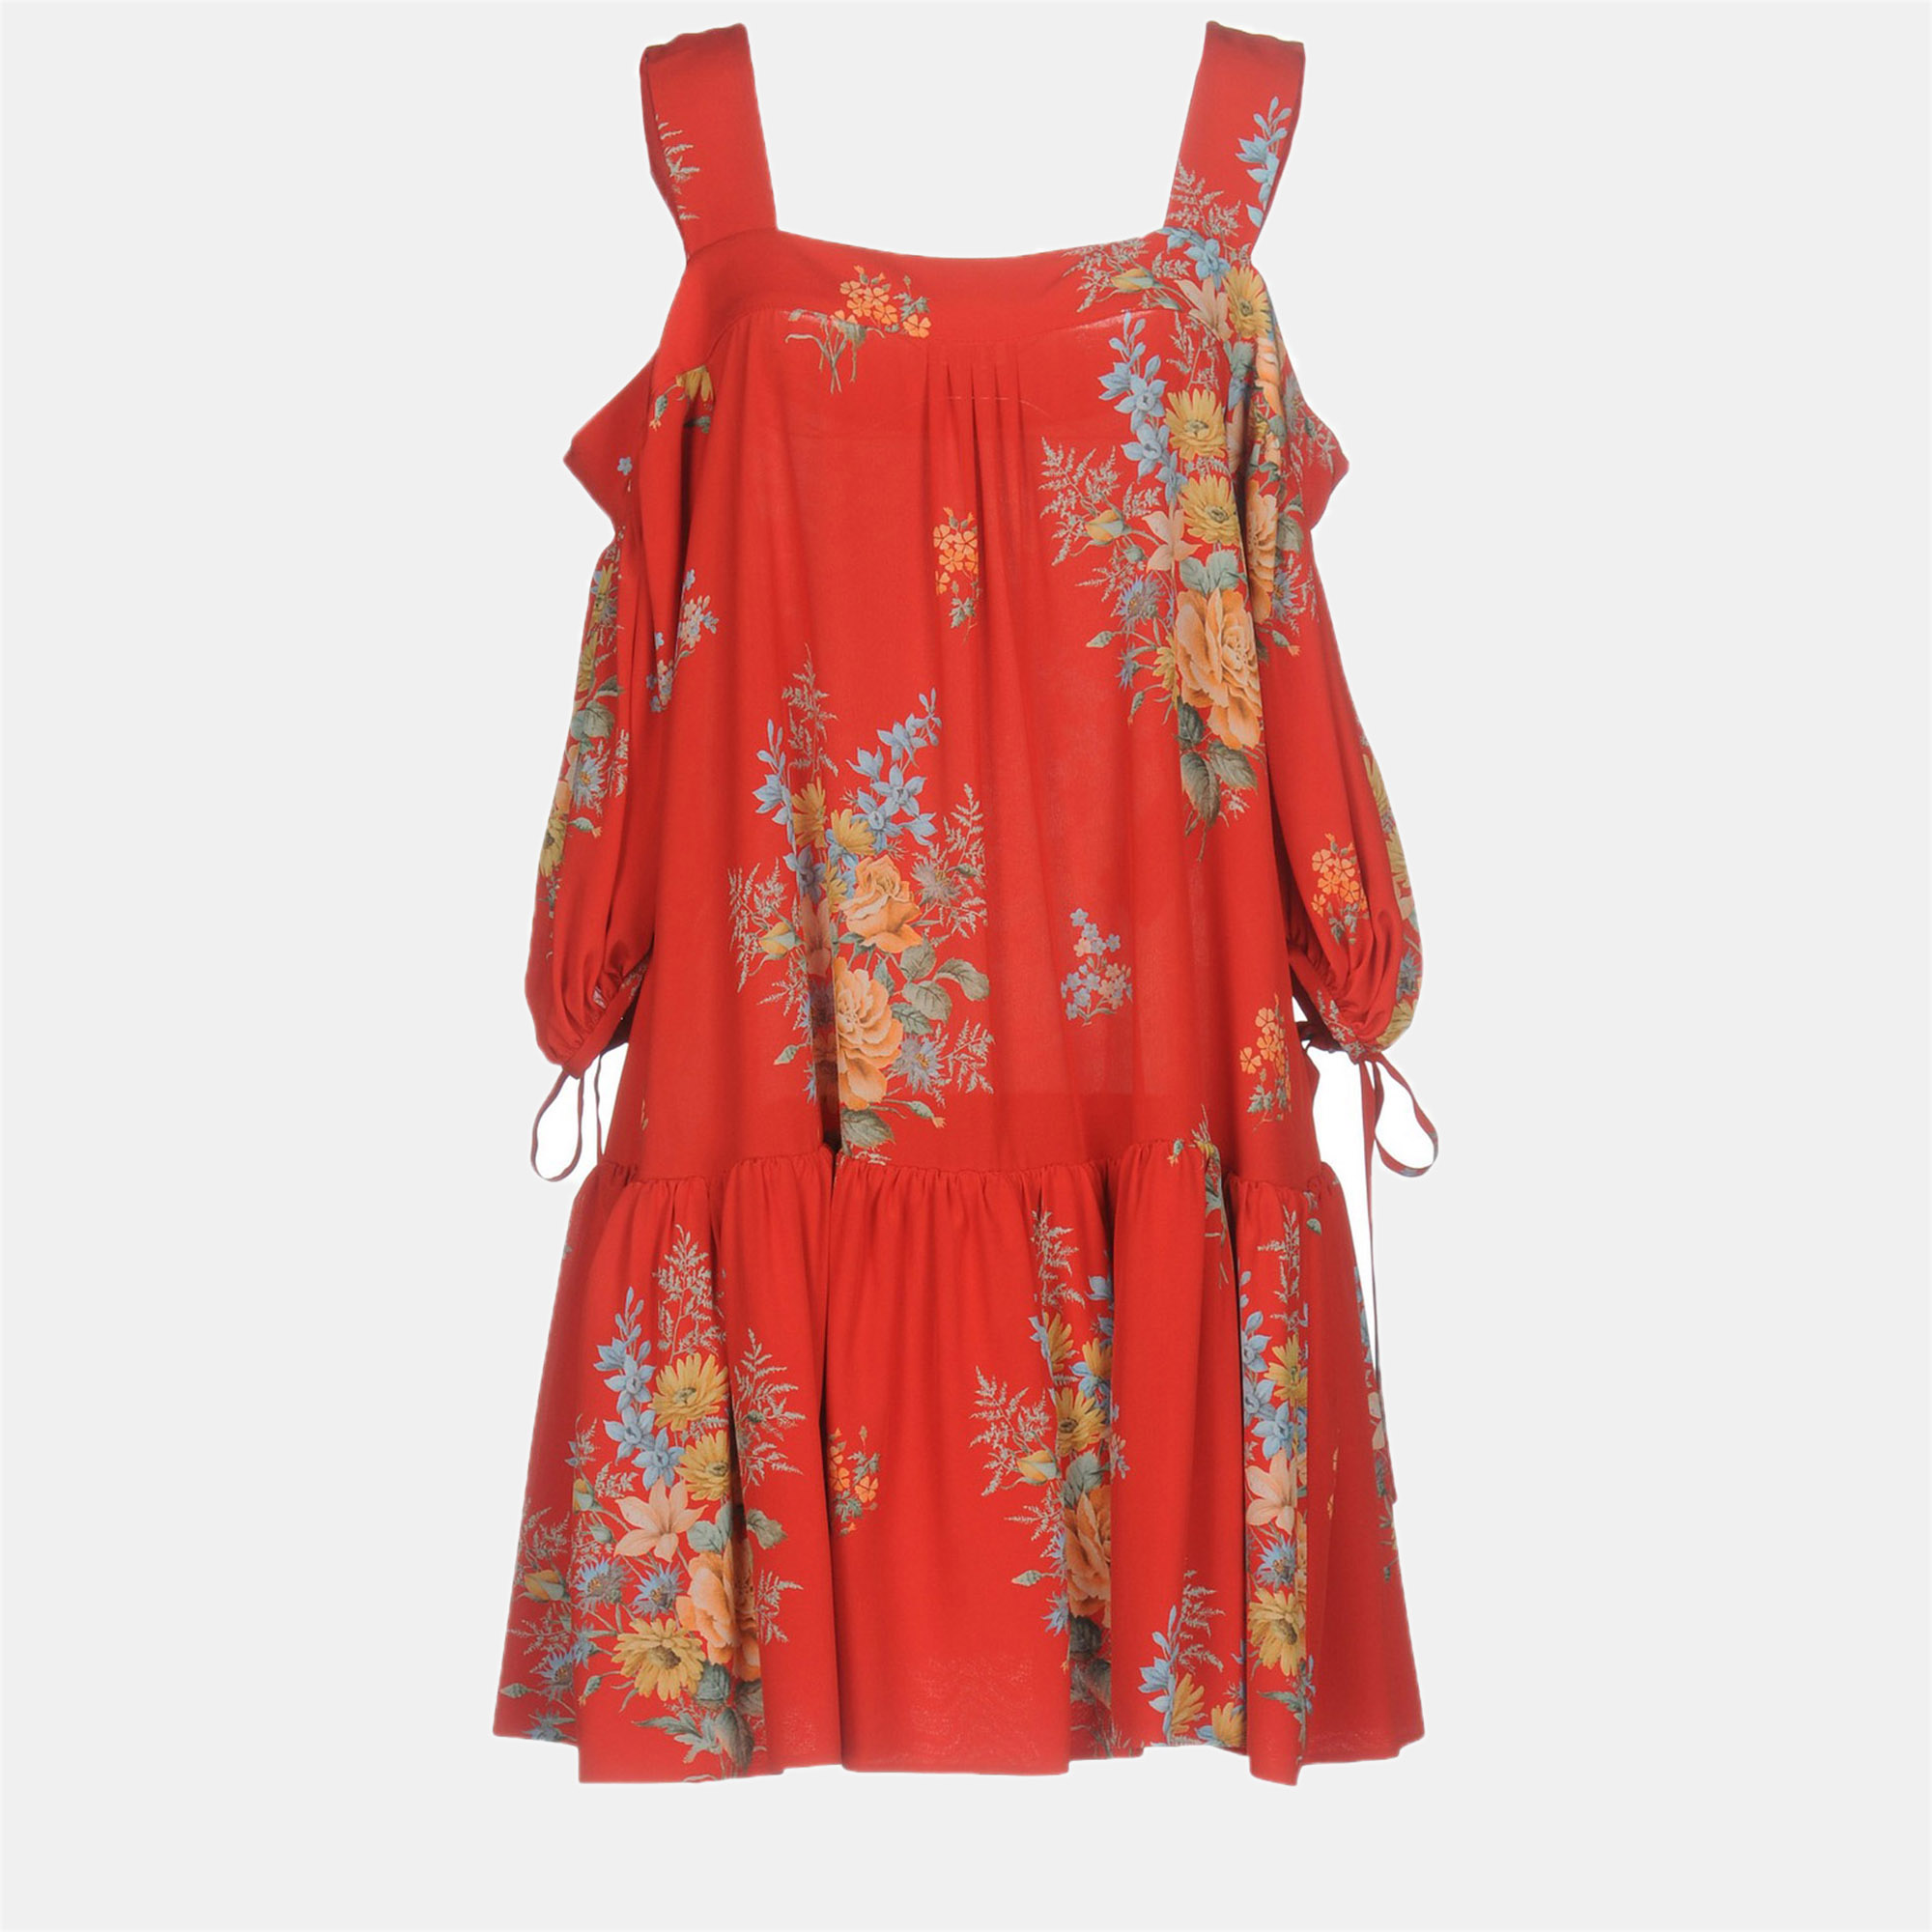 Alexander mcqueen red floral print silk mini dress s (it 40)